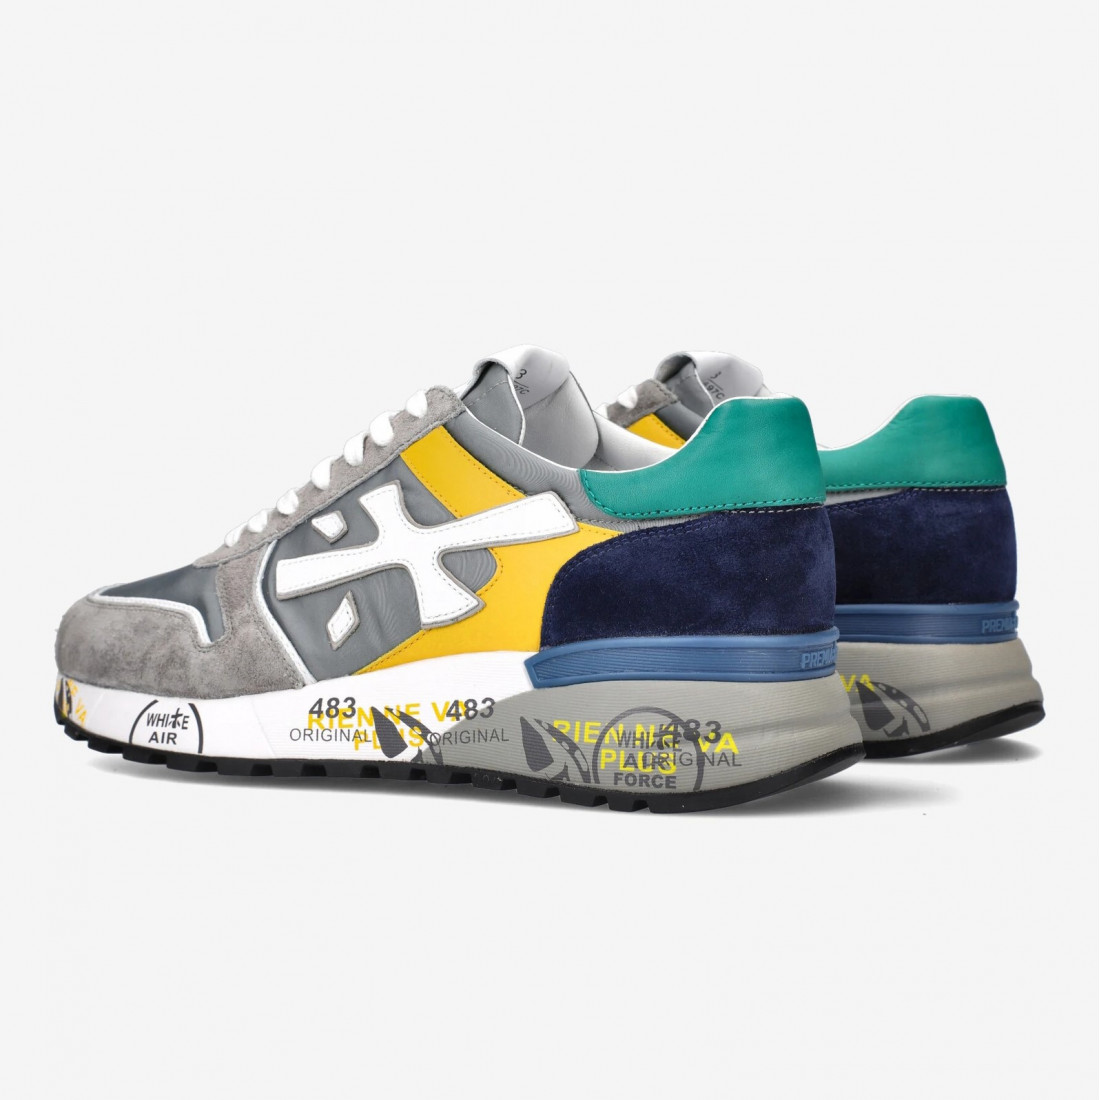 Premiata Mick 5697 gray, yellow, blue and green men's sneaker